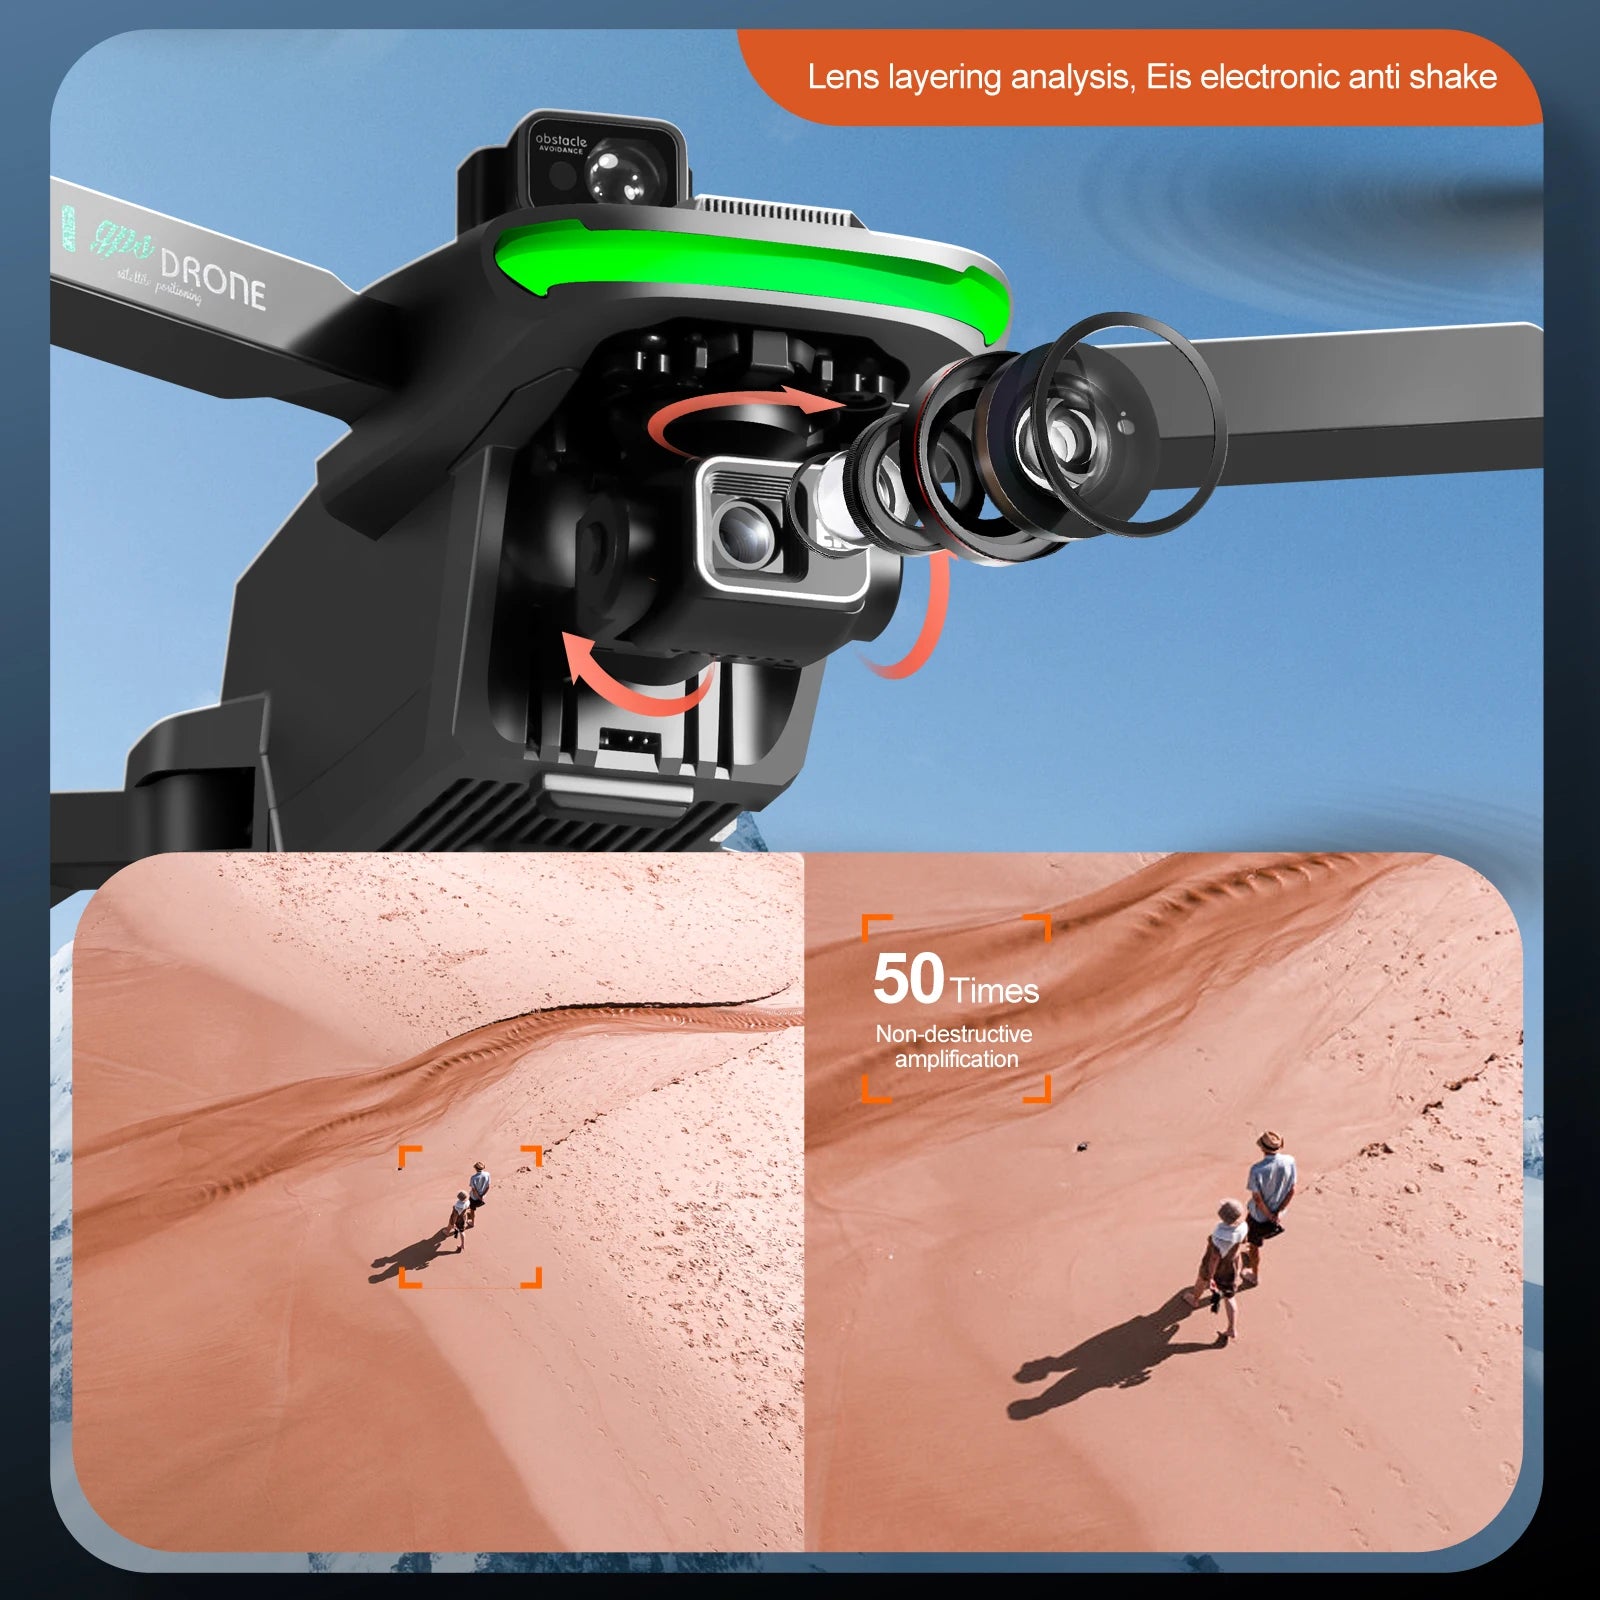 S155 Drone, Eis electronic anti-shake obslacle Aroidango @ 50Times Non-destruct